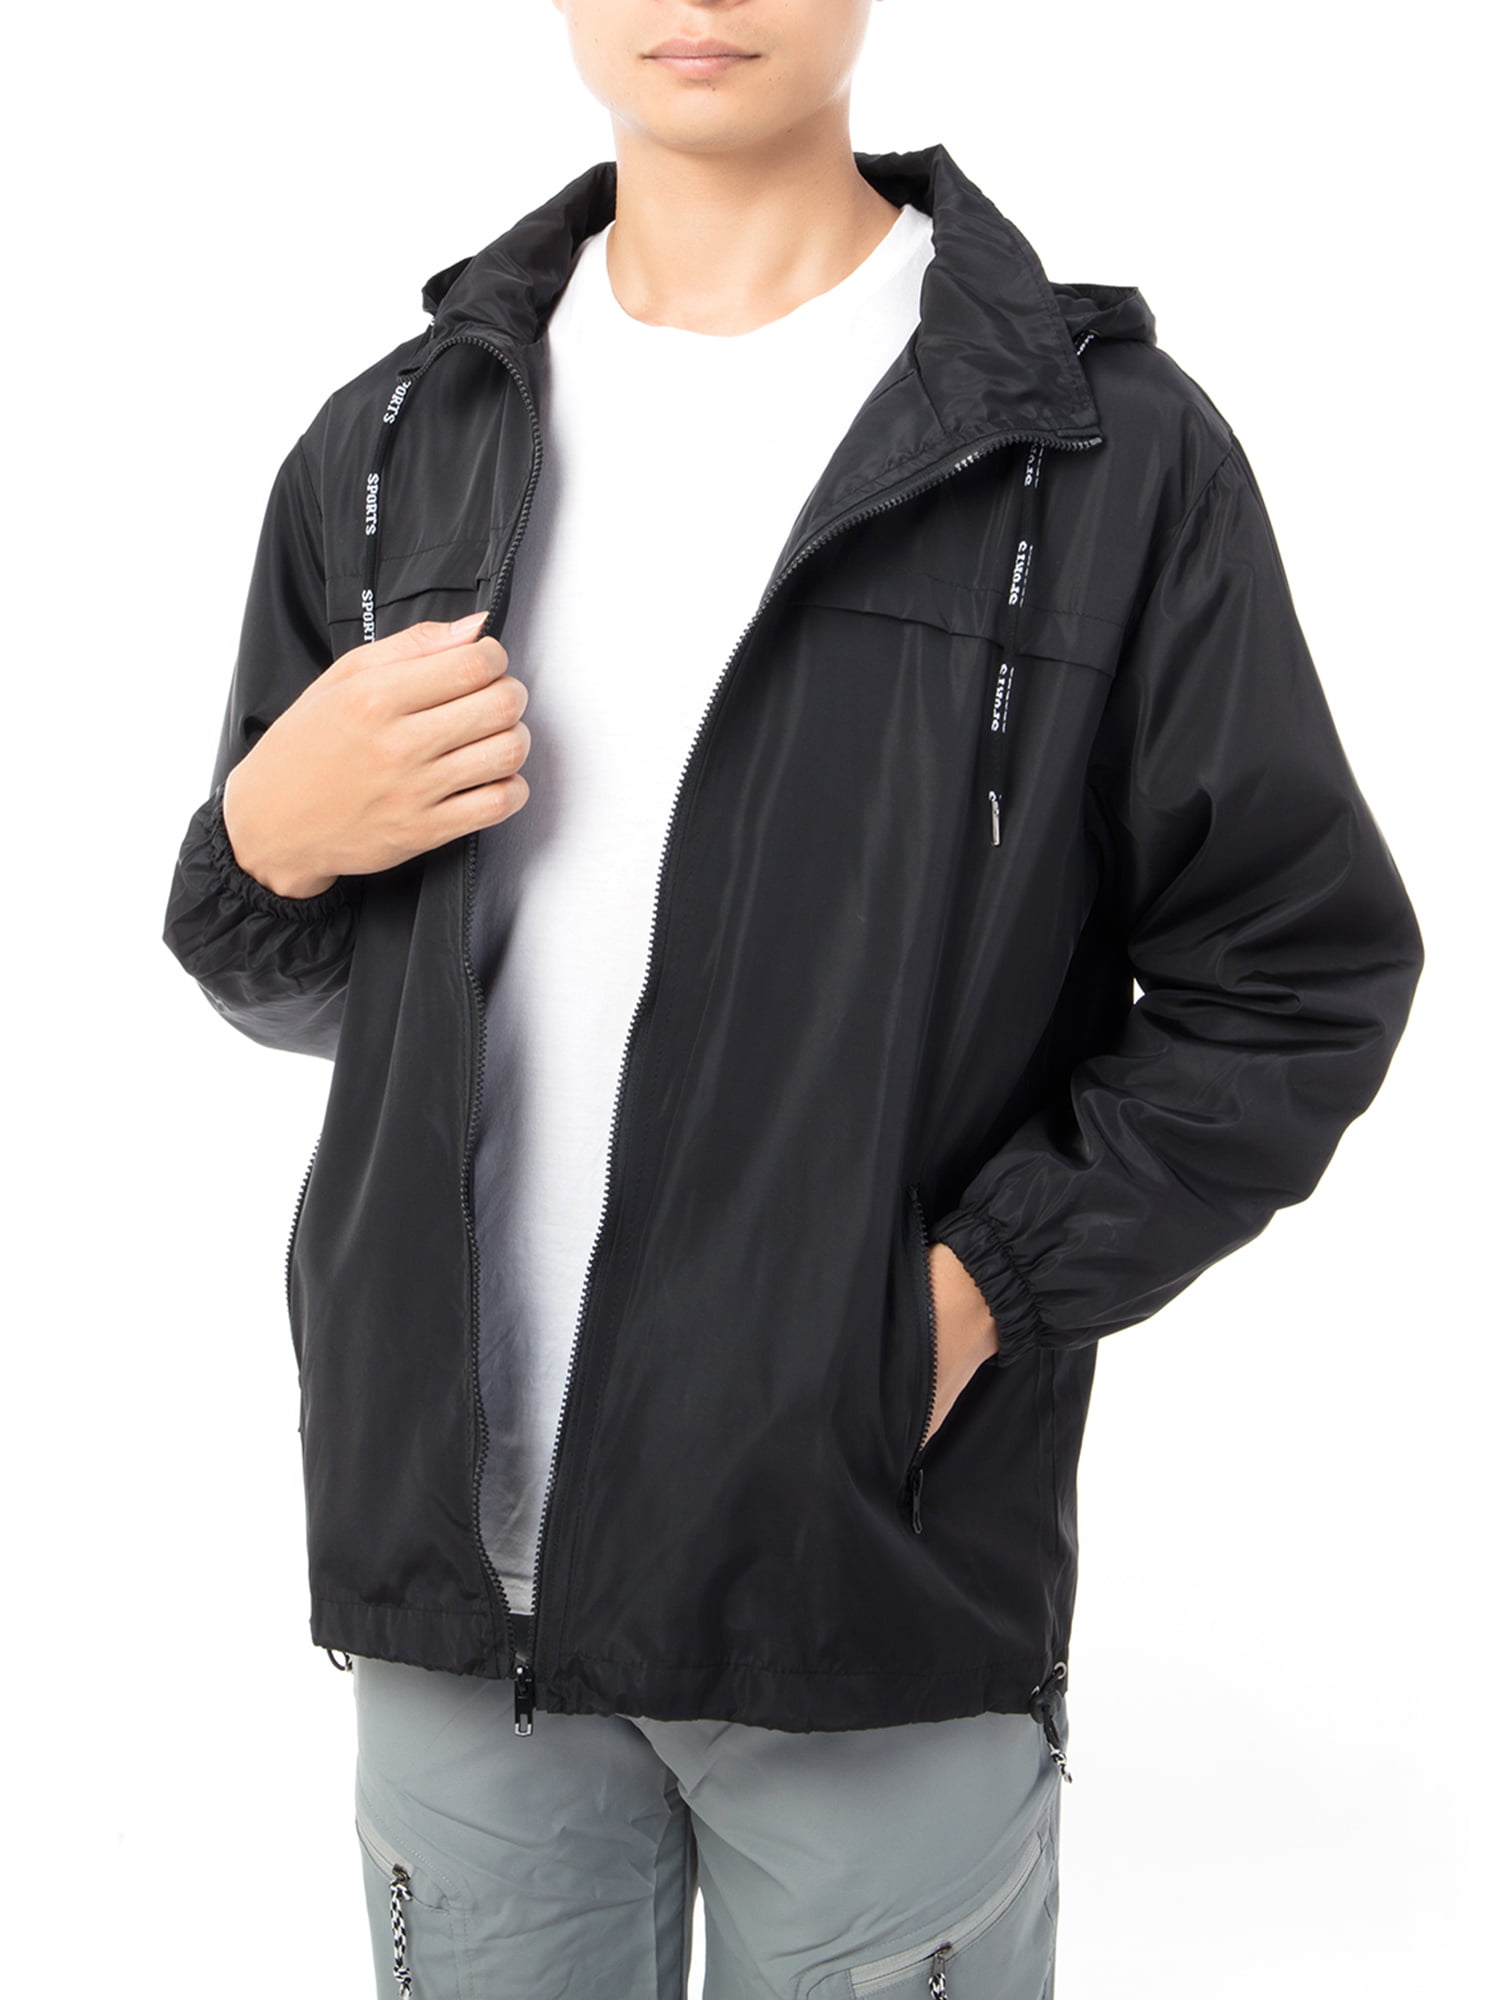 Hoodie Windbreaker Jacket with Monogram and Zipped Pockets